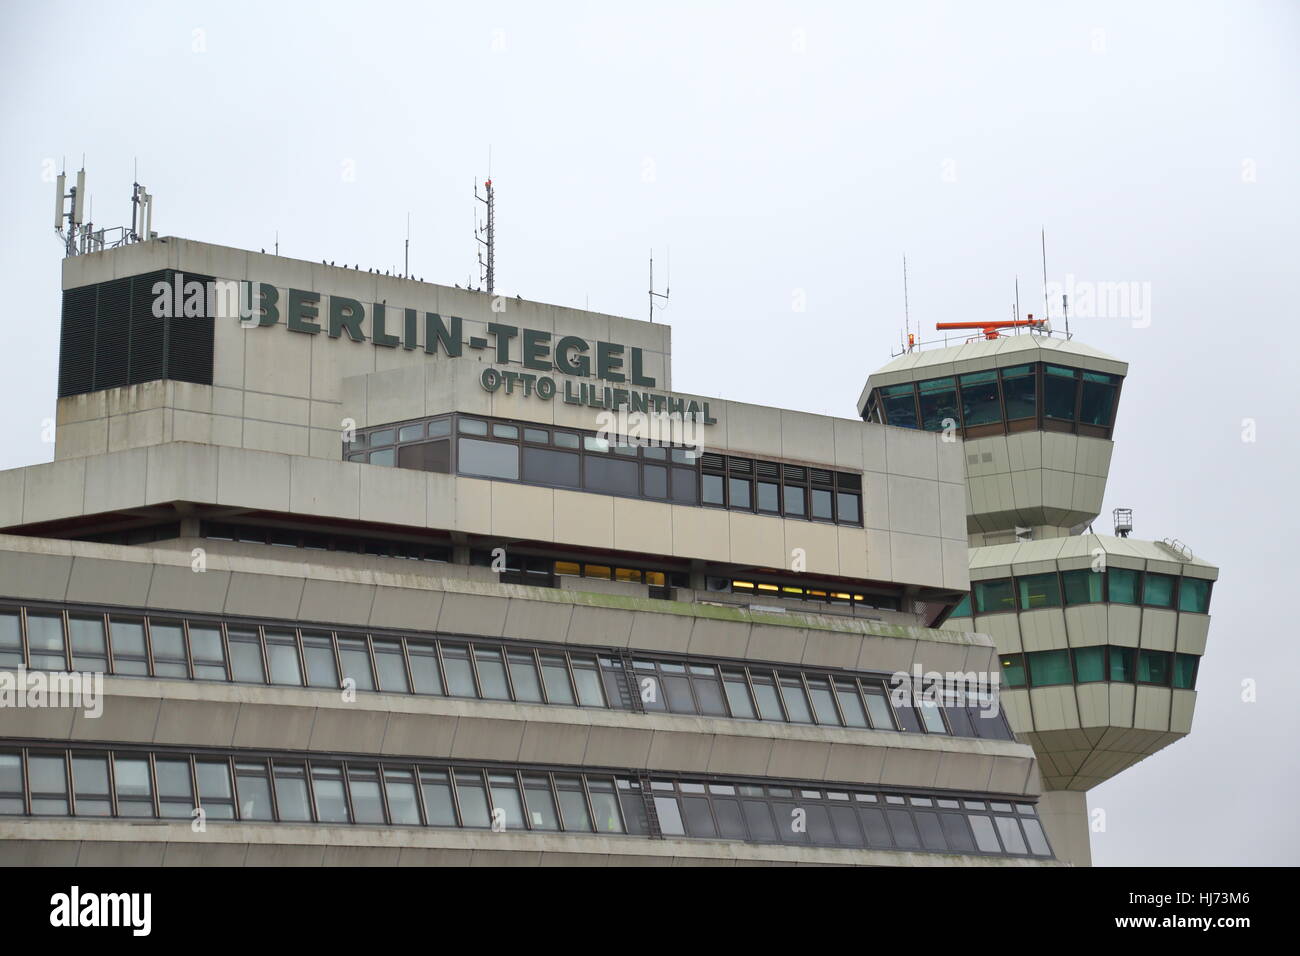 Airport building of Berlin-Tegel International Airport, Germany Stock Photo